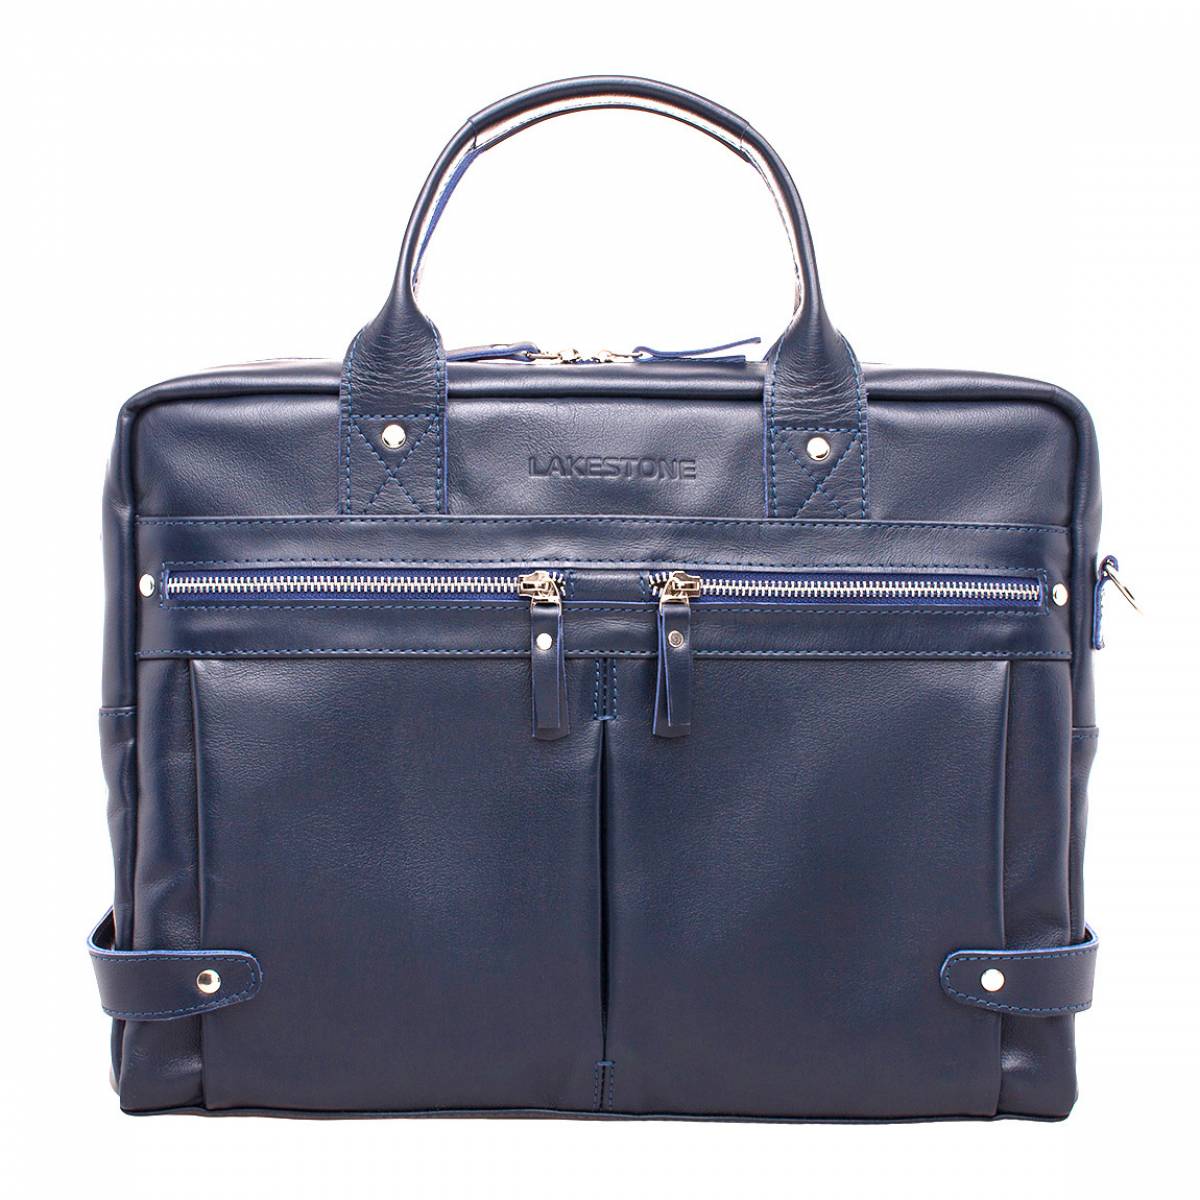 Синяя мужская сумка. Деловая сумка Jacob Dark Blue. Мужская сумка coach Dark Blue. Lakestone сумки мужские. Gian Ferrente деловая мужская сумка.